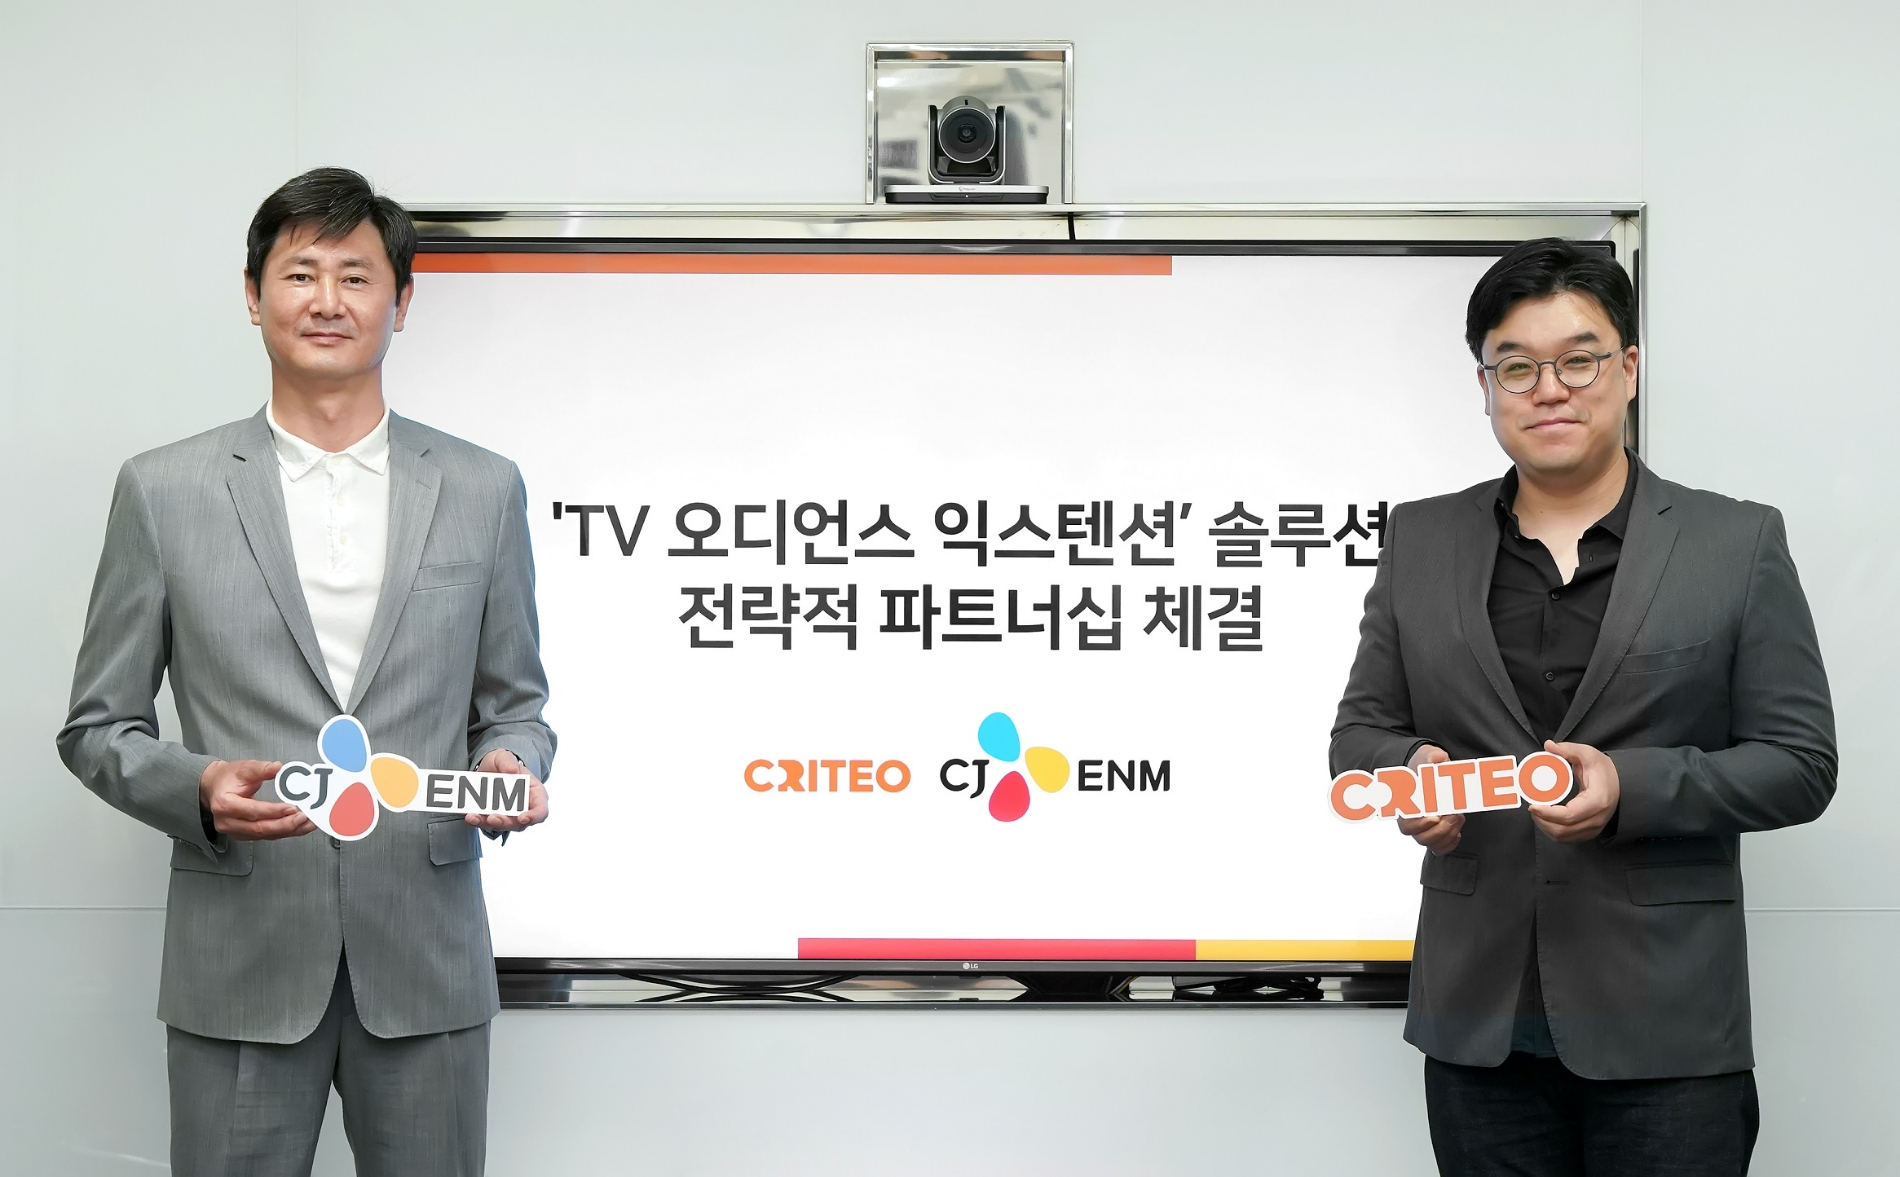 CJ ENM 이상무 미디어솔루션본부장(왼쪽)과 크리테오코리아 김도윤 대표(오른쪽)가 12일 서울 중구 제일제당 센터 내 CJ ENM 사무실에서 'TV 오디언스 익스텐션 파트너십'을 체결하고 있다./사진제공=CJ ENM